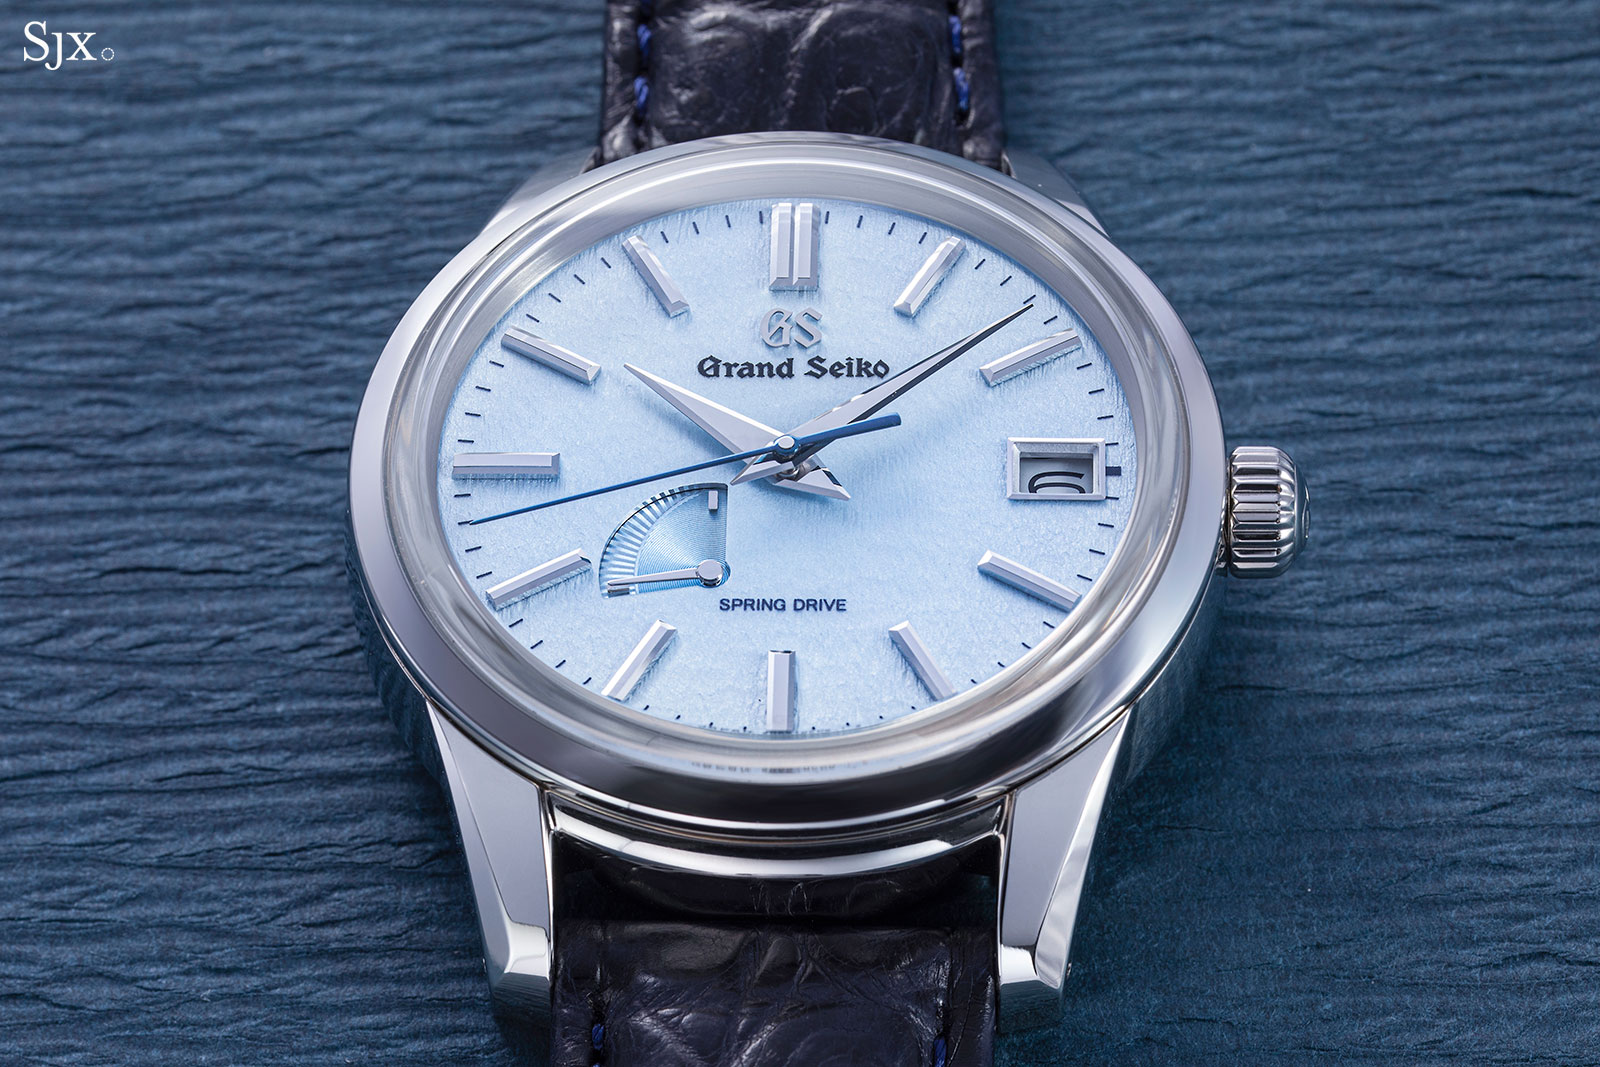 Up Close: Grand Seiko Spring Drive “Blue Snowflake” SBGA407 | SJX Watches